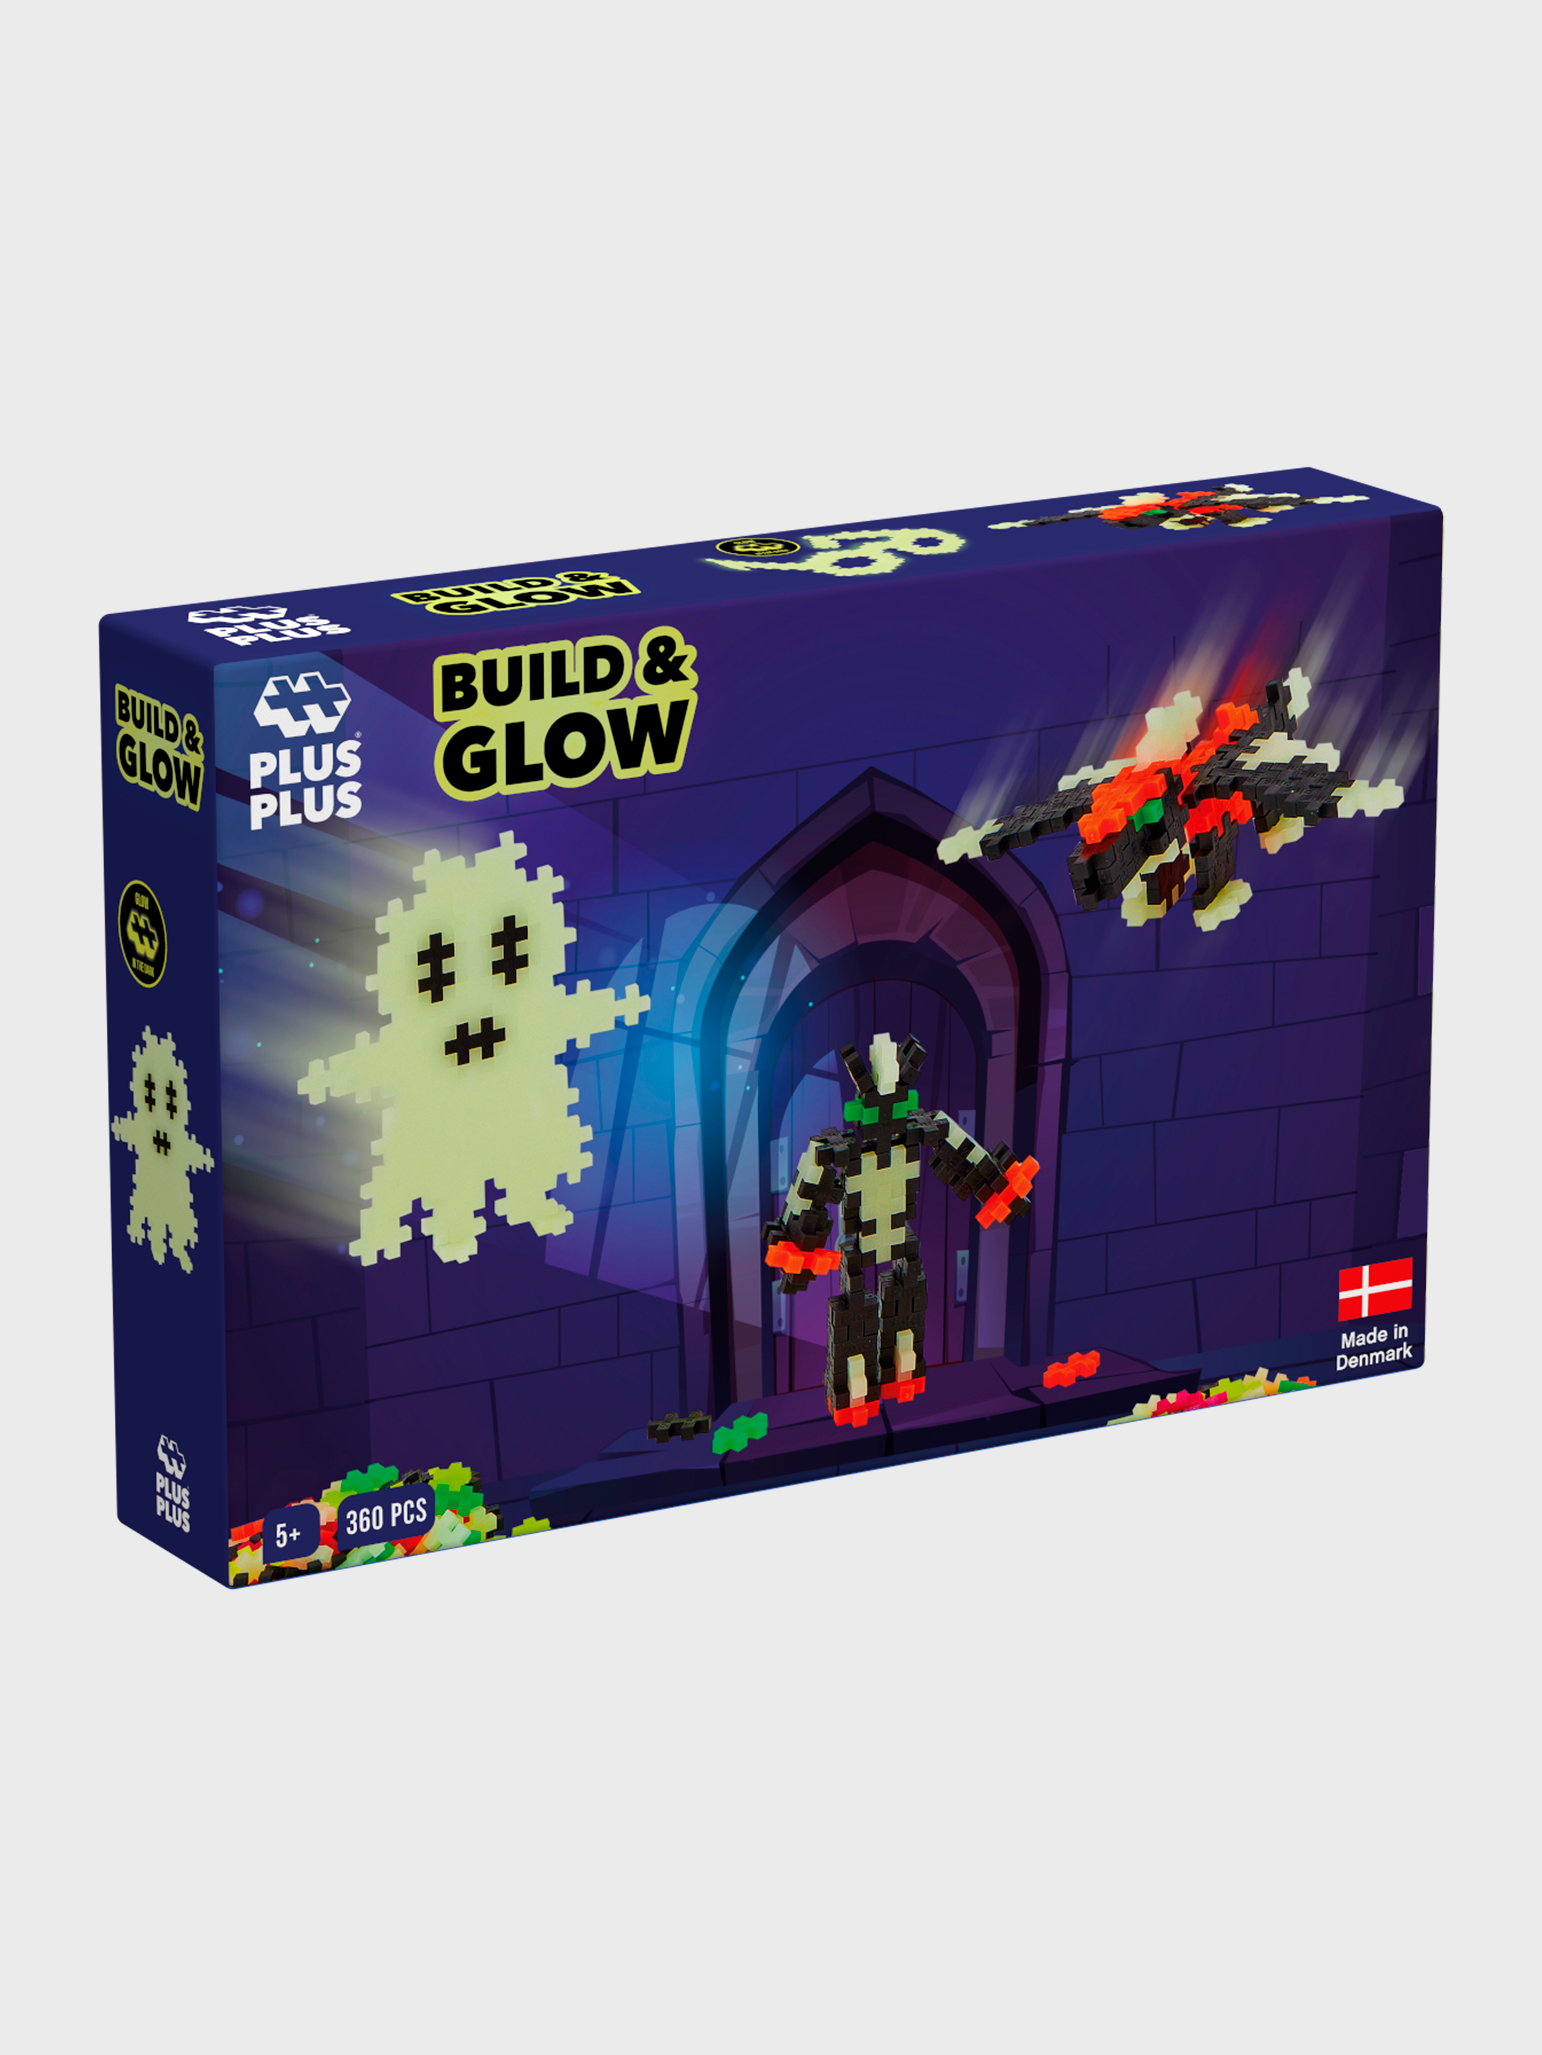 Build and glow - 360 pcs